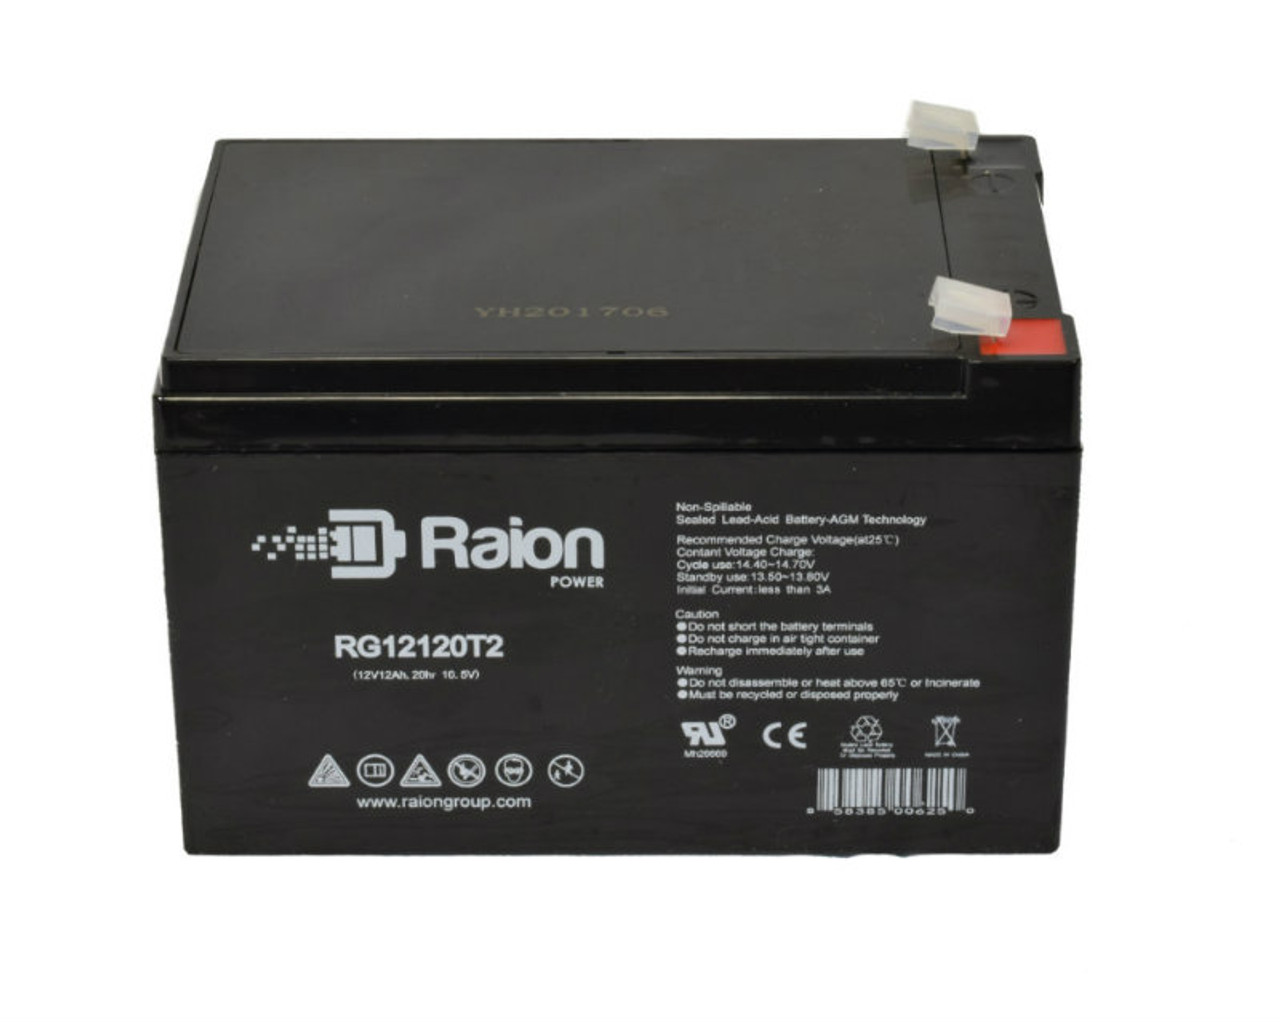 Raion Power RG12120T2 SLA Battery for AJC D10S